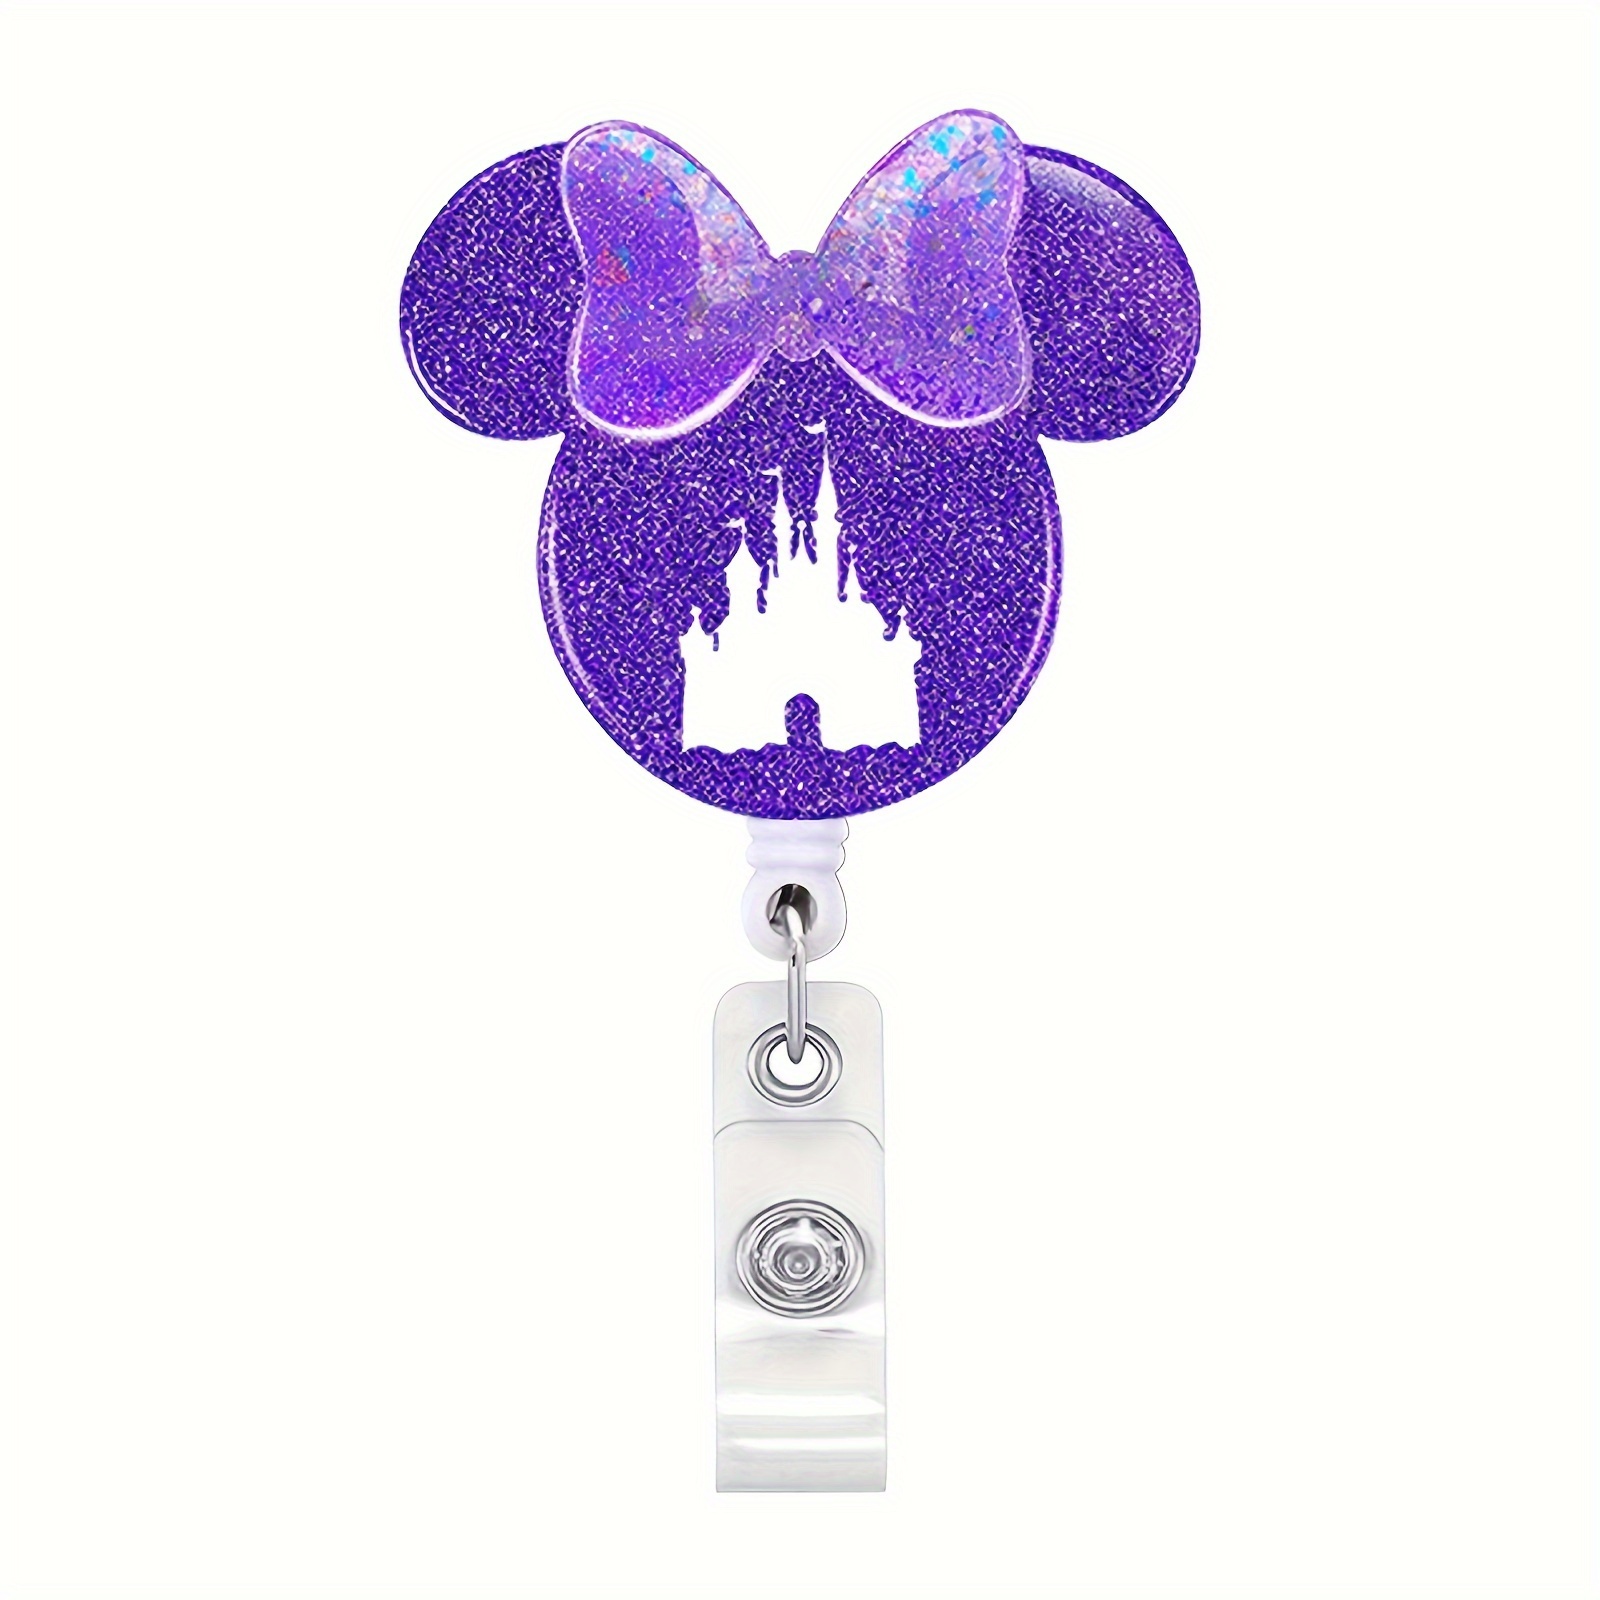 Minnie Inspired Badge Reel Disney Badge Holder Mickey Inspired